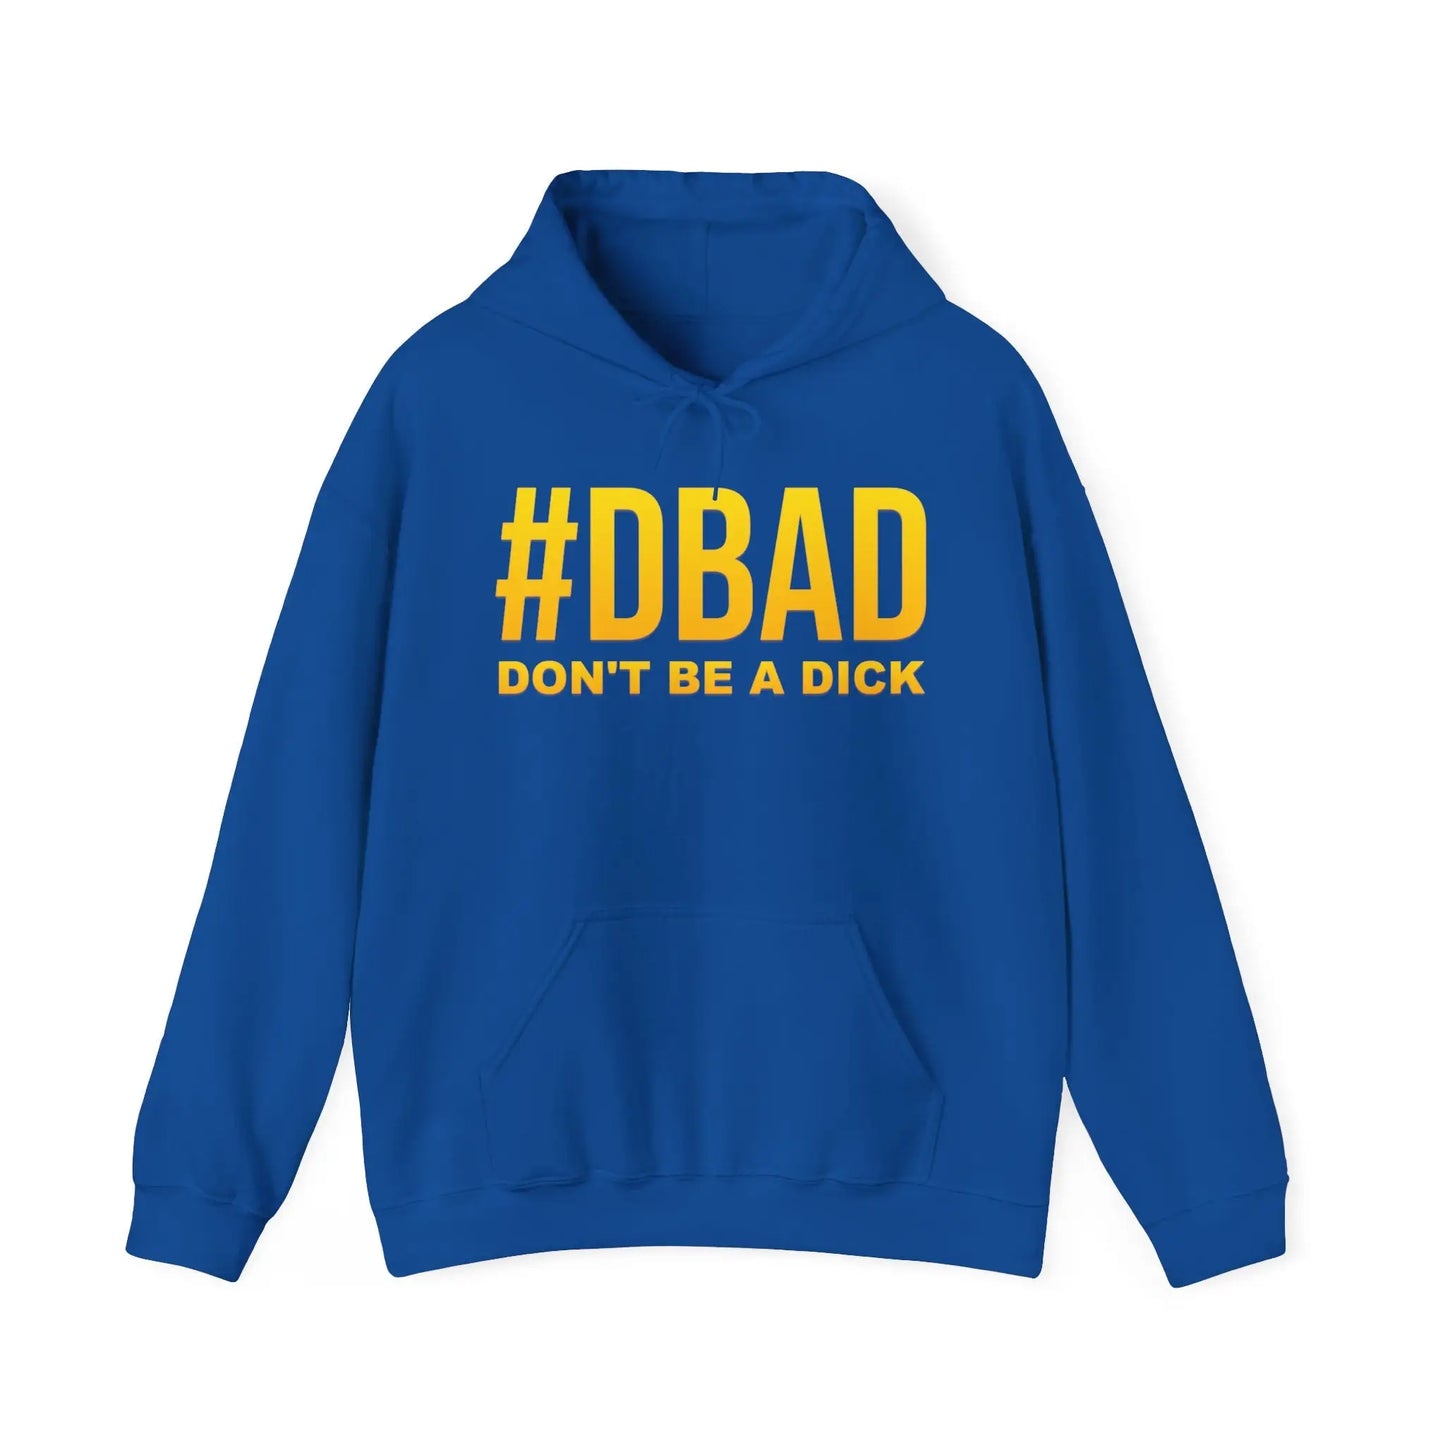 Don't Be A D*ck Men's Hooded Sweatshirt - Wicked Tees